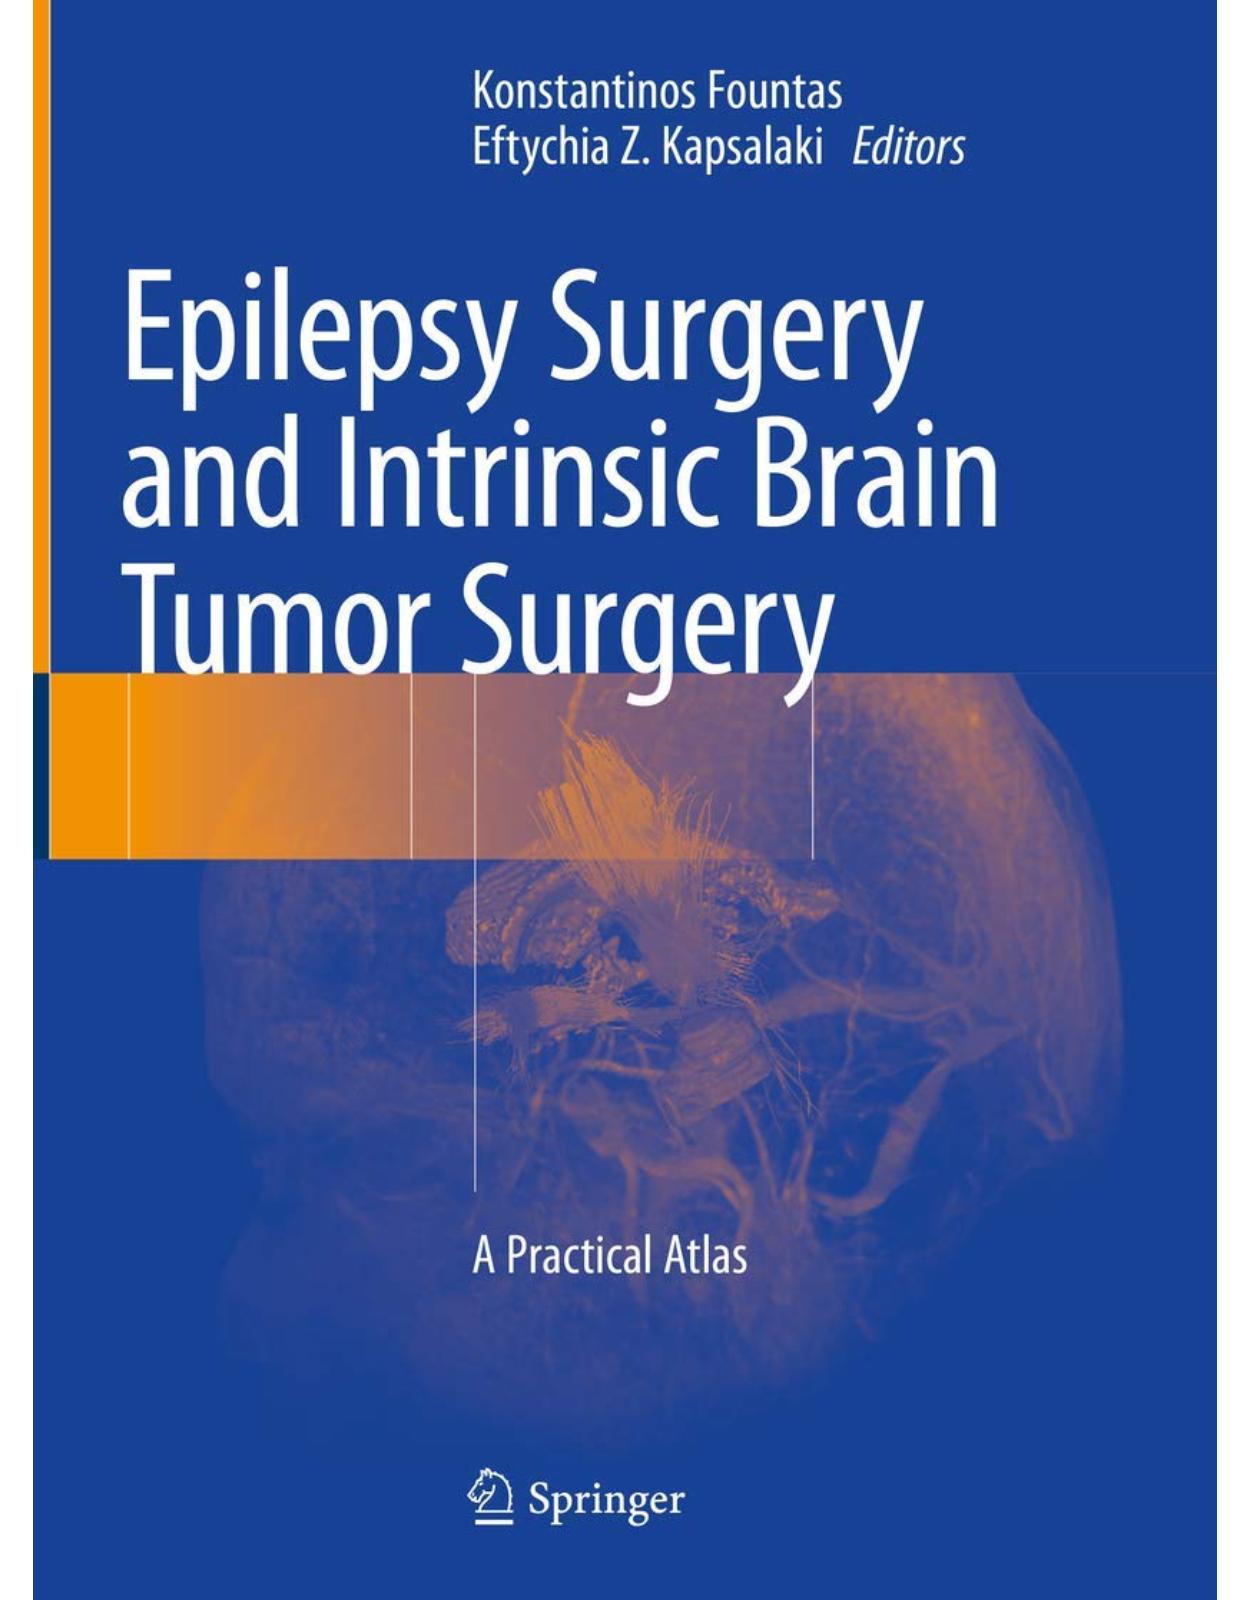 Epilepsy Surgery and Intrinsic Brain Tumor Surgery: A Practical Atlas